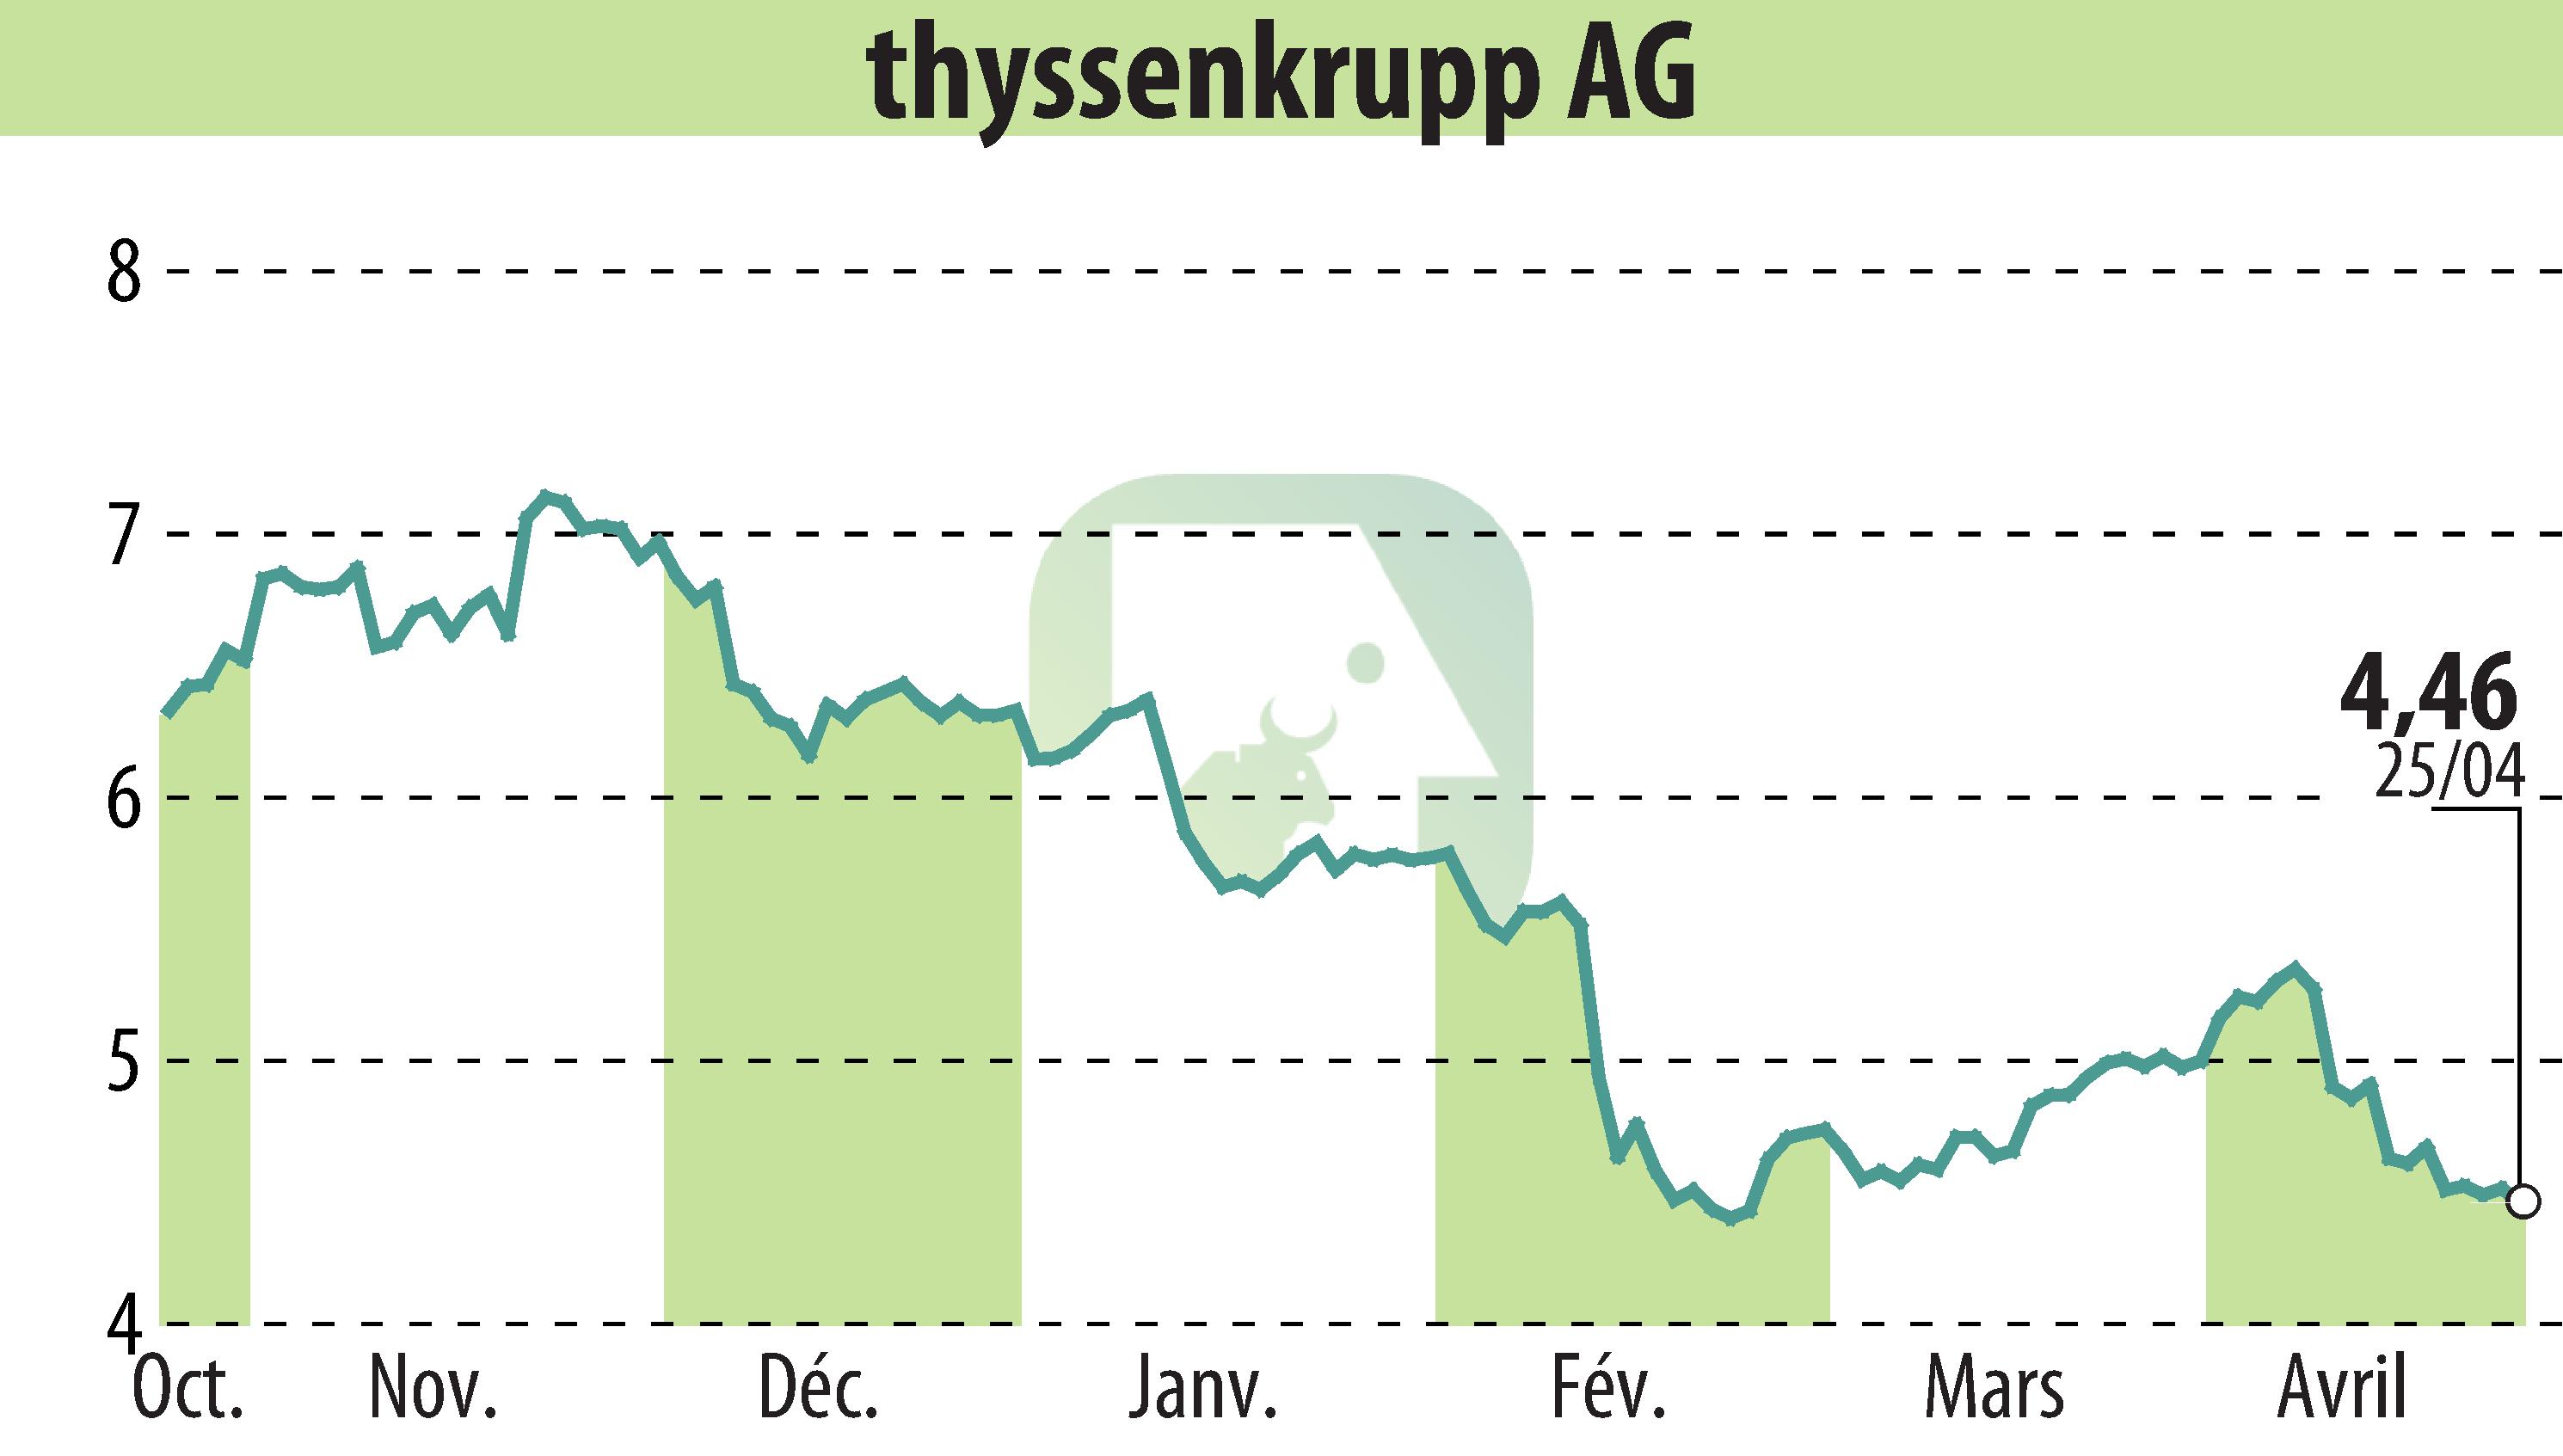 Stock price chart of ThyssenKrupp AG (EBR:TKA) showing fluctuations.